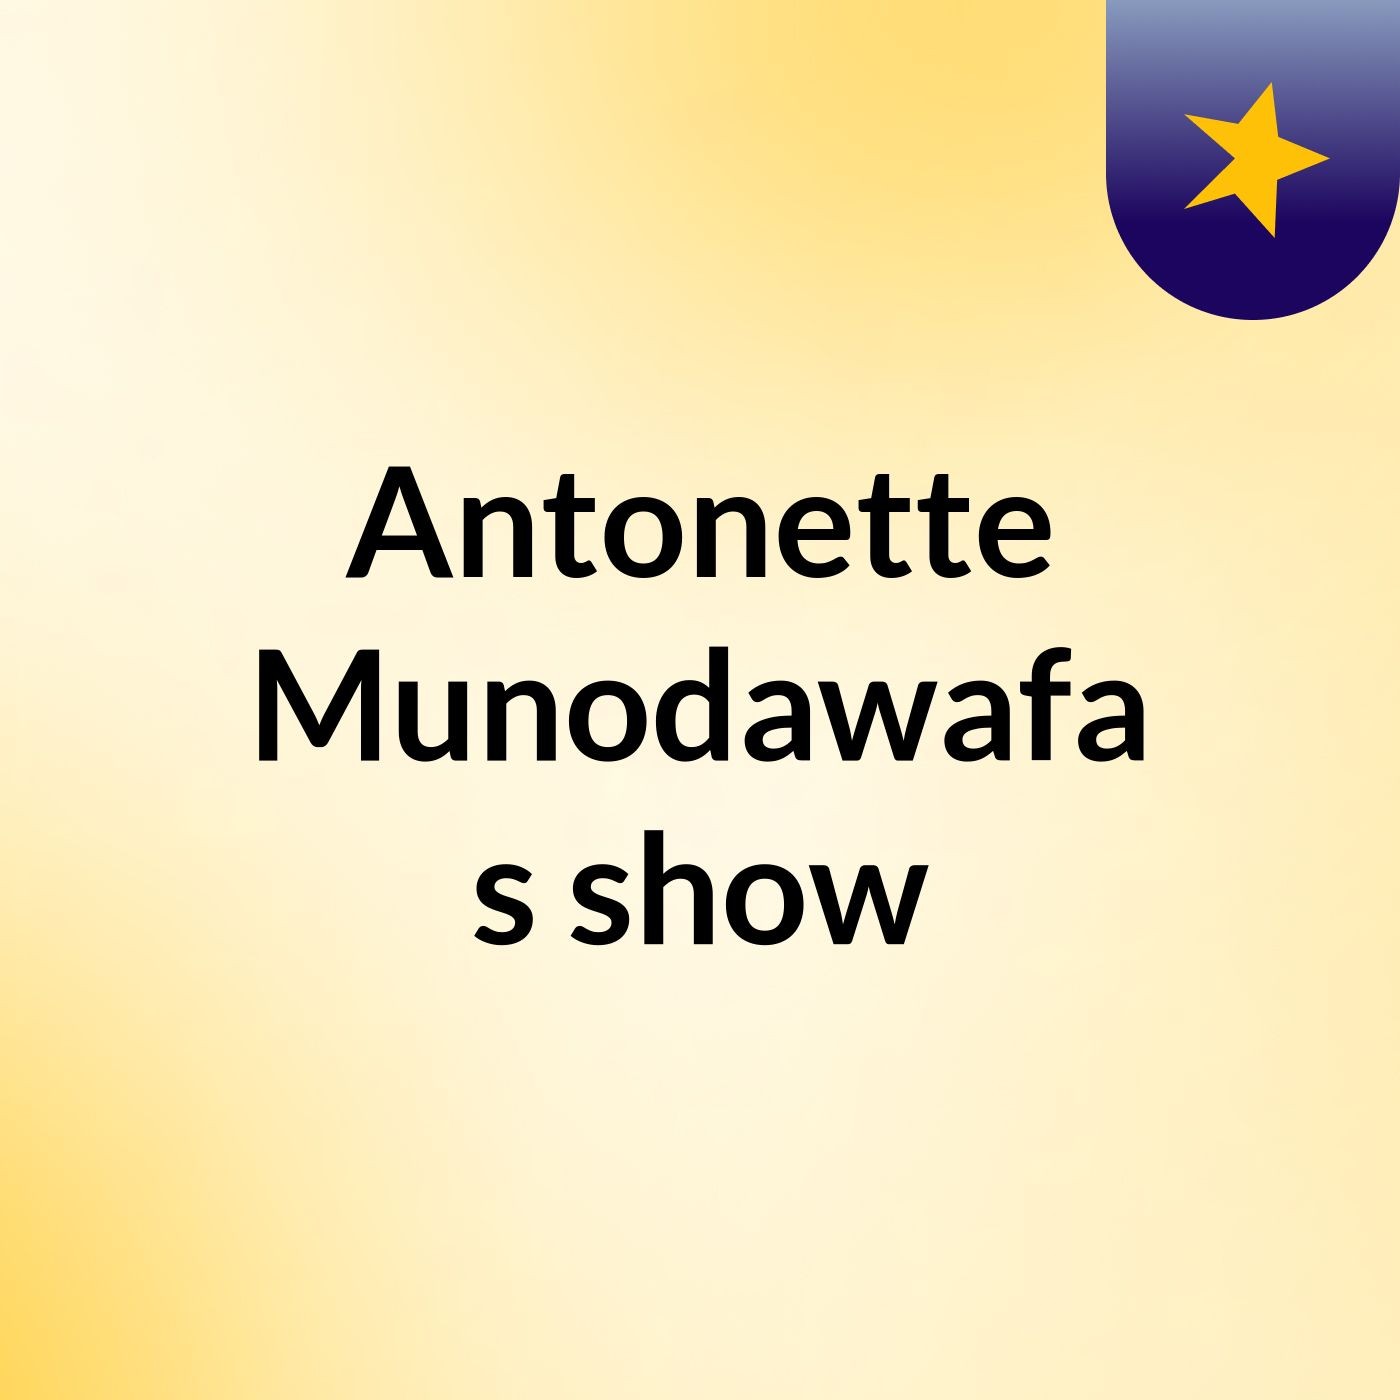 Antonette Munodawafa's show